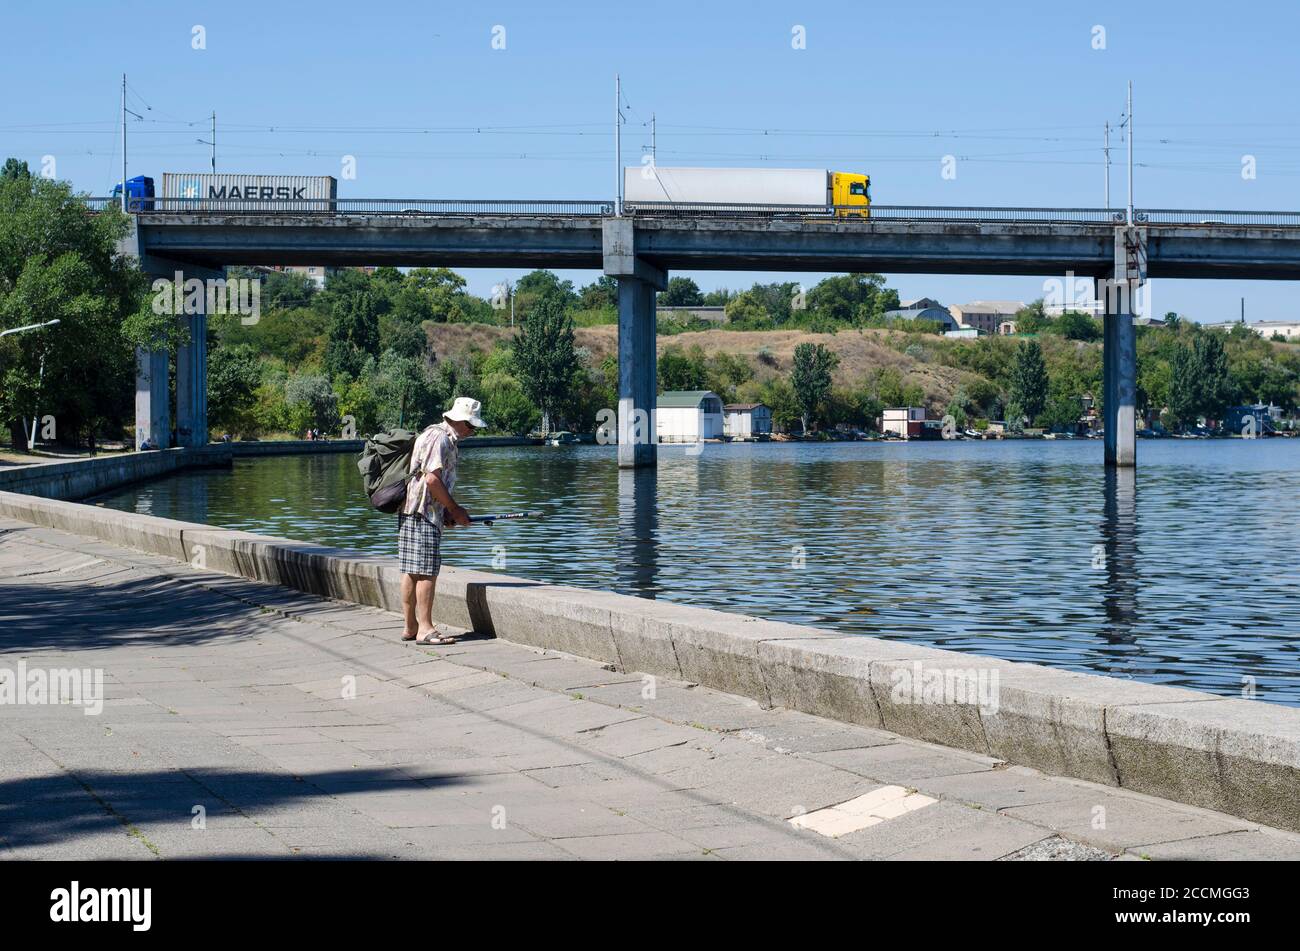 Nikolaev, Ukraine - August 17, 2020: Mature man catches fish on the city embankment. Truck tractors cross the bridge across the Ingul River in the bac Stock Photo